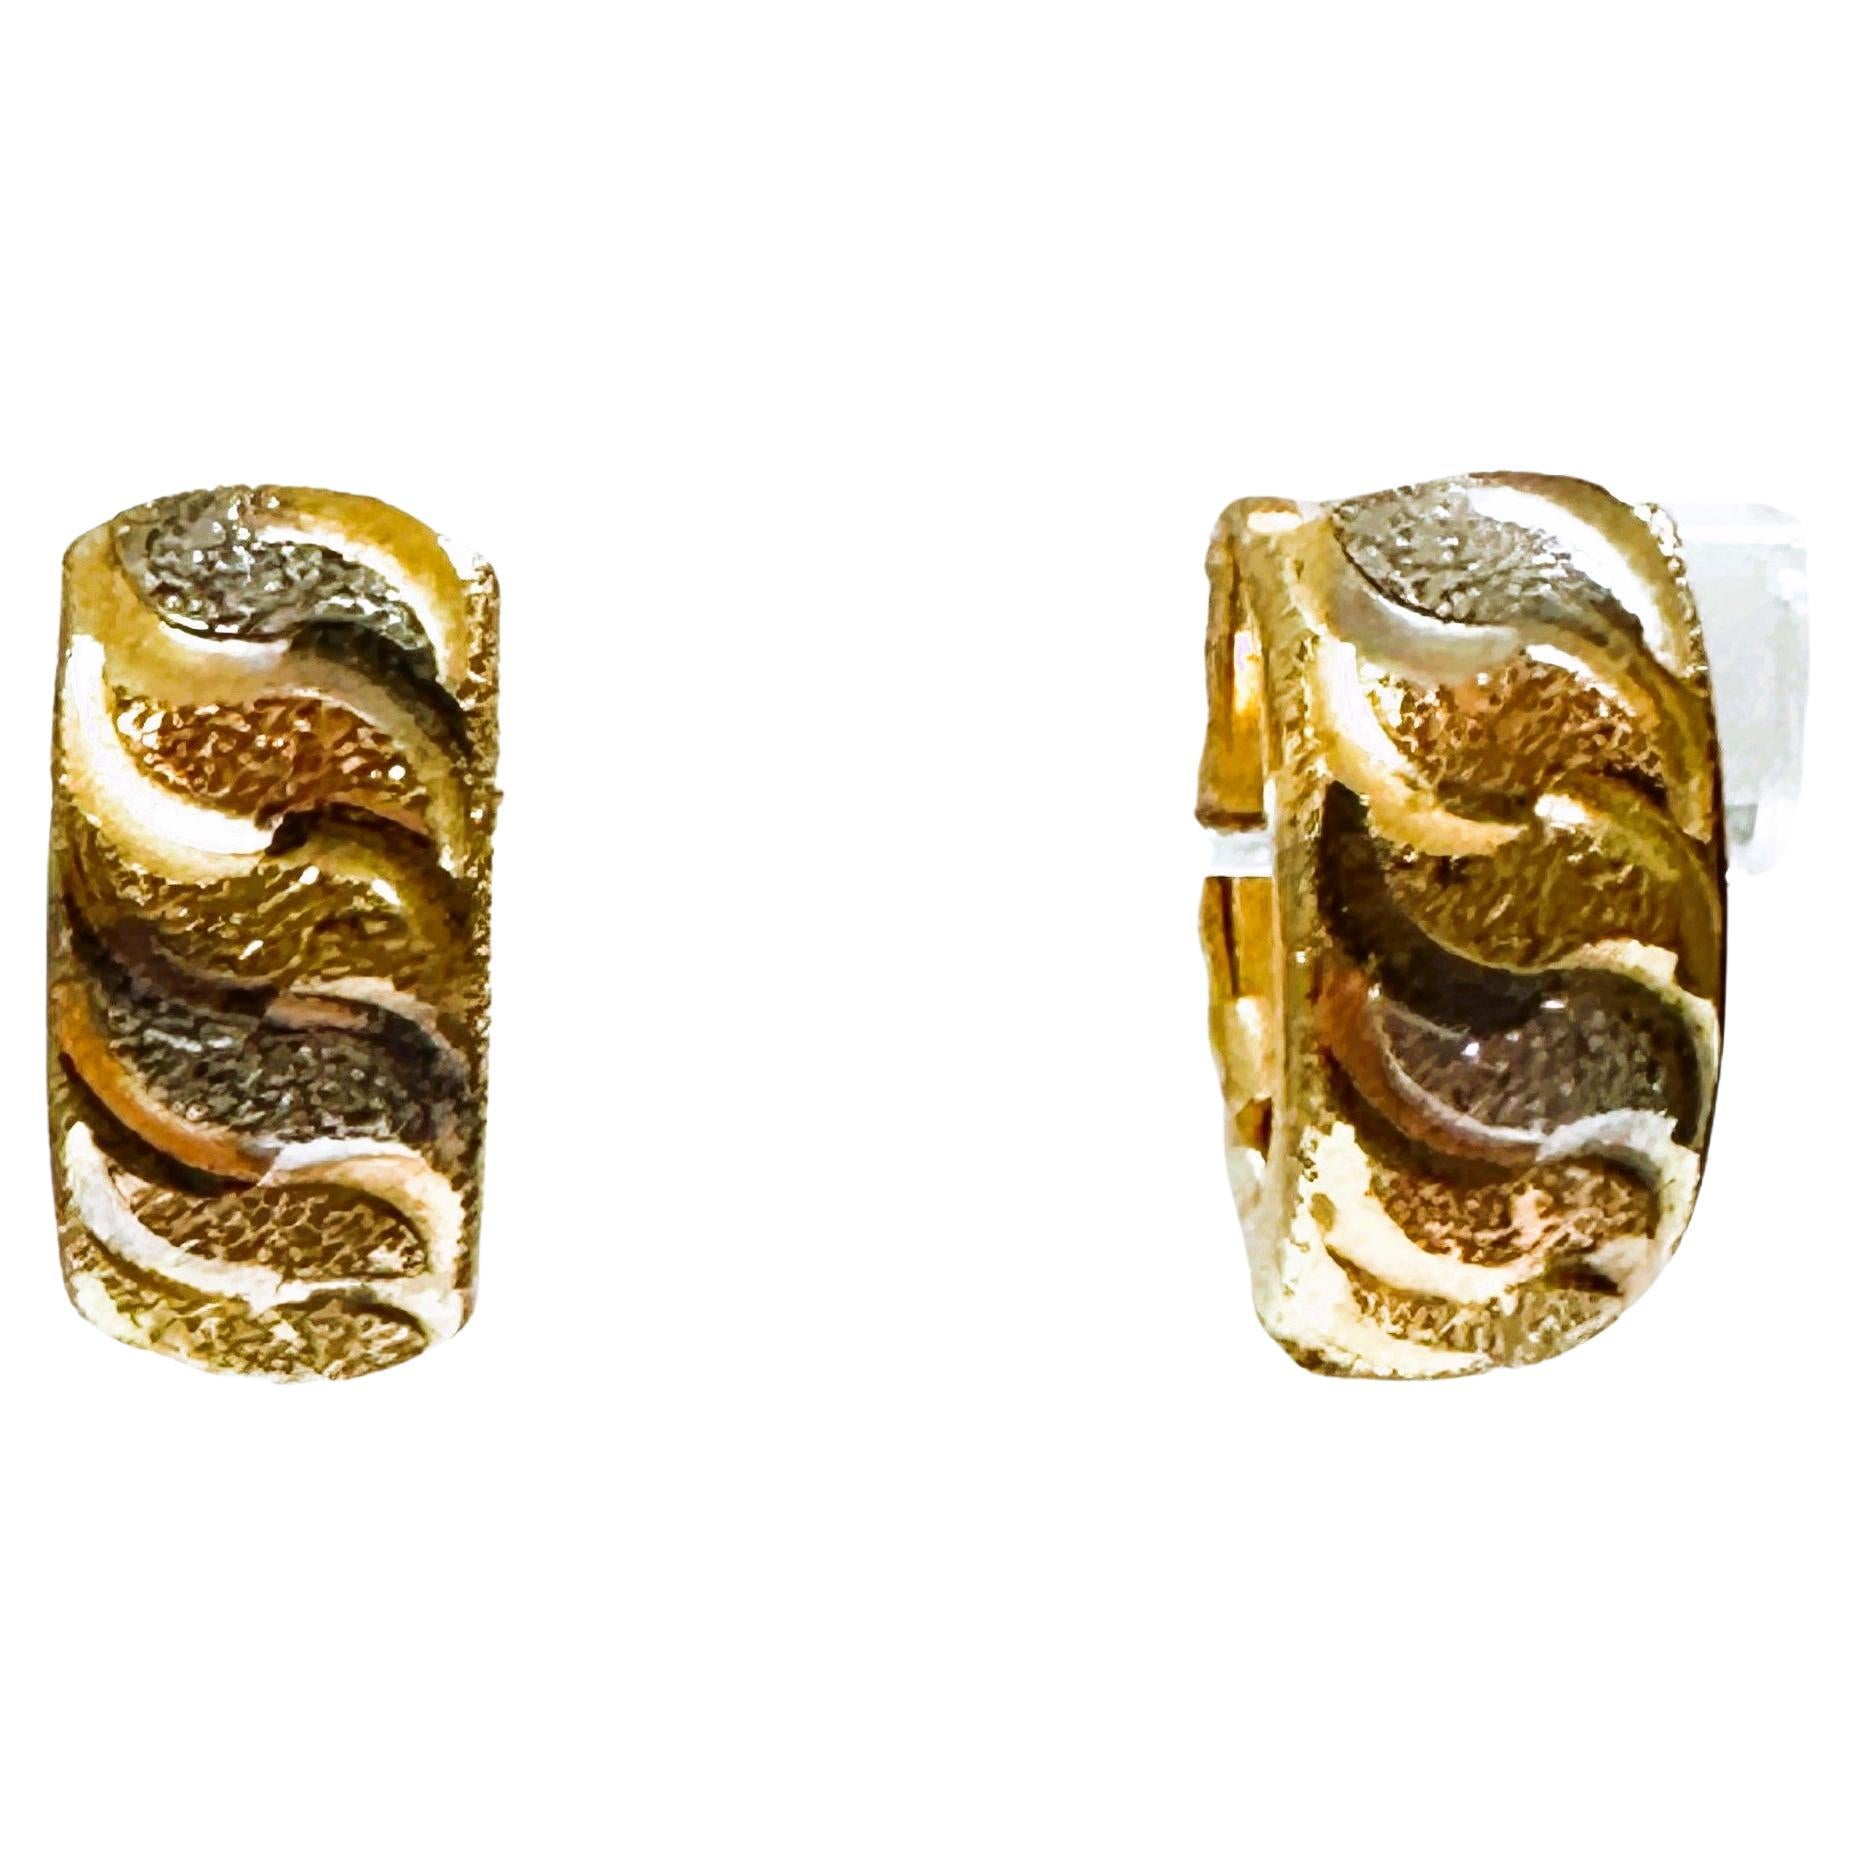 18K White, Yellow & Rose Gold Huggie Earrings 2.39 Grams - Stamped